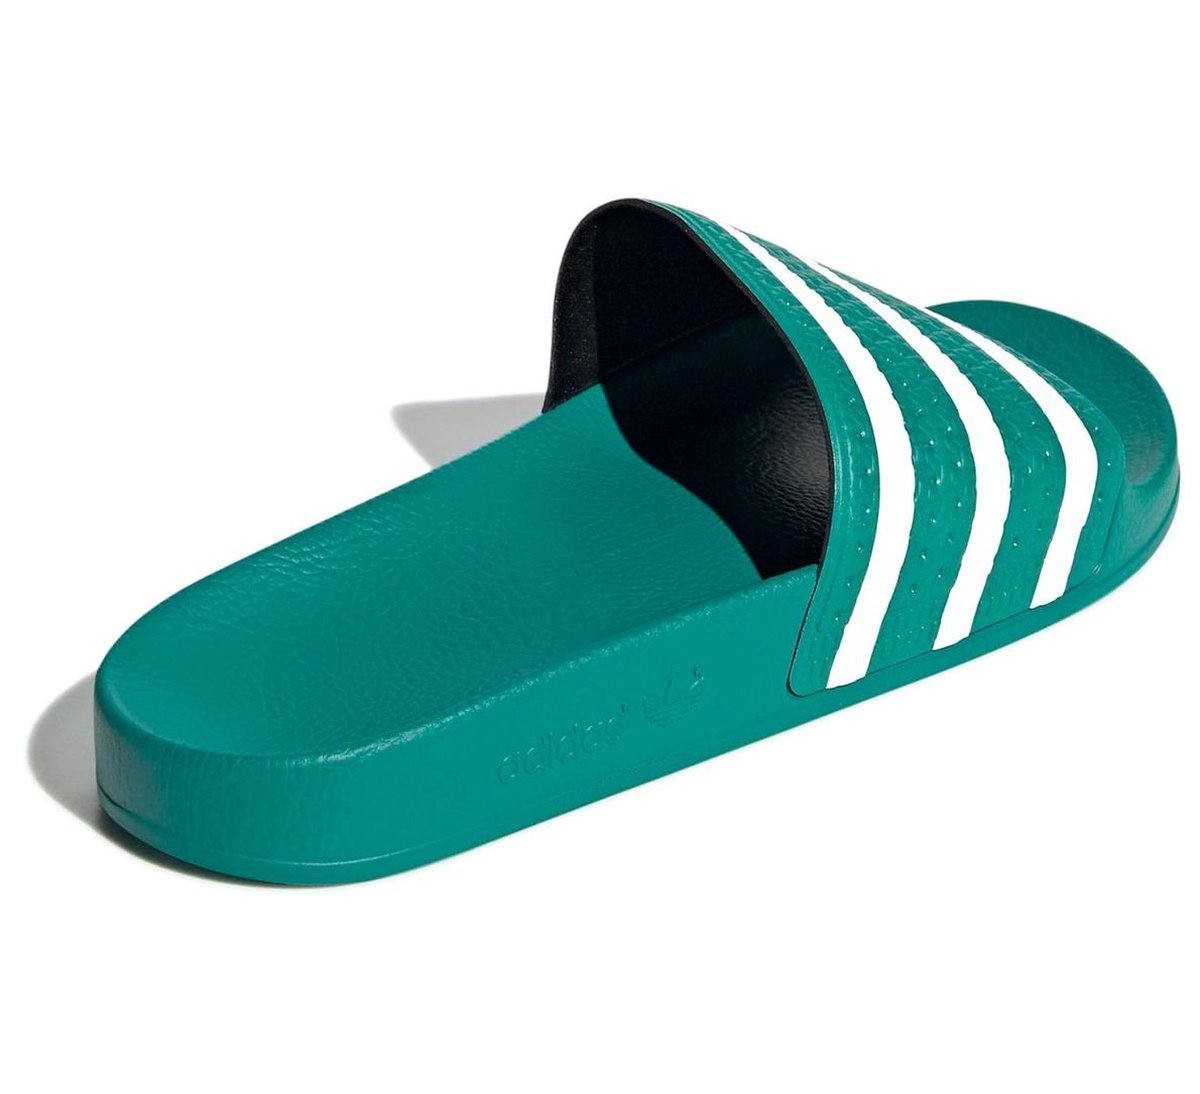 adidas Slippers - Maat 42 - Unisex - groen/wit | bol